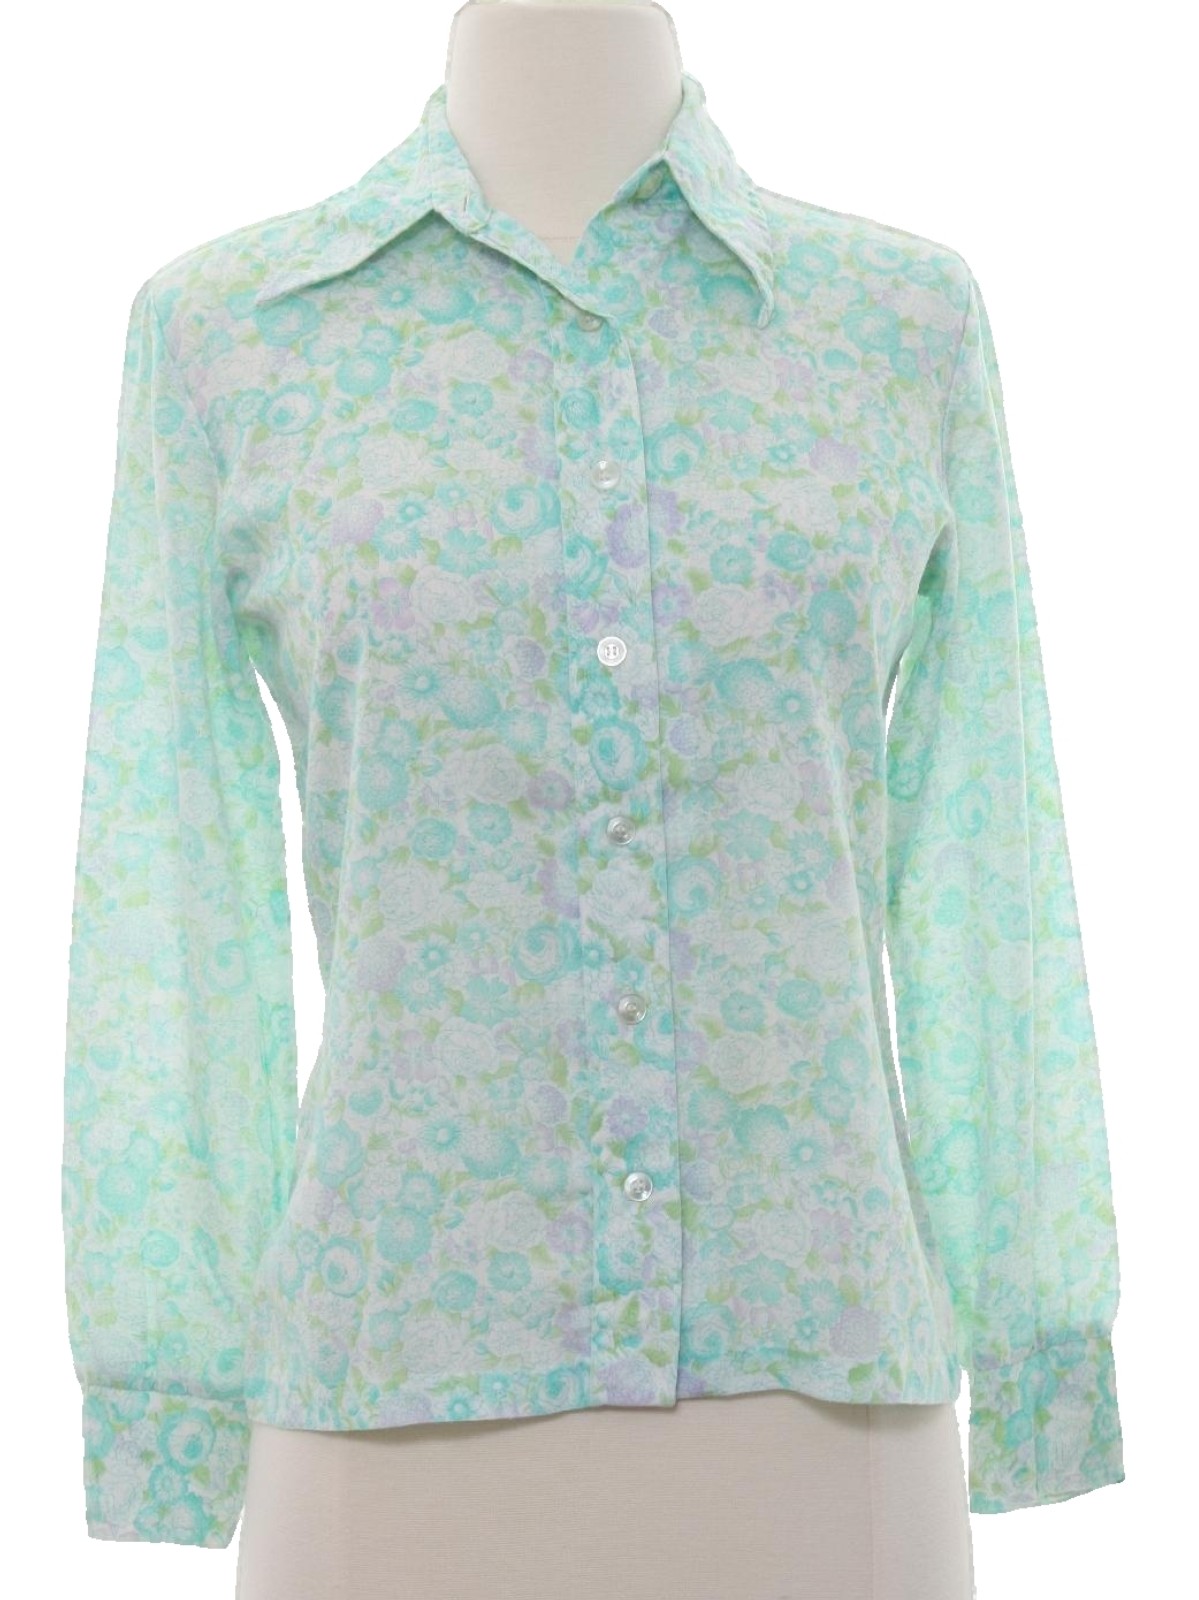 Retro Seventies Shirt: 70s -Sears JR Bazaar- Womens white background ...